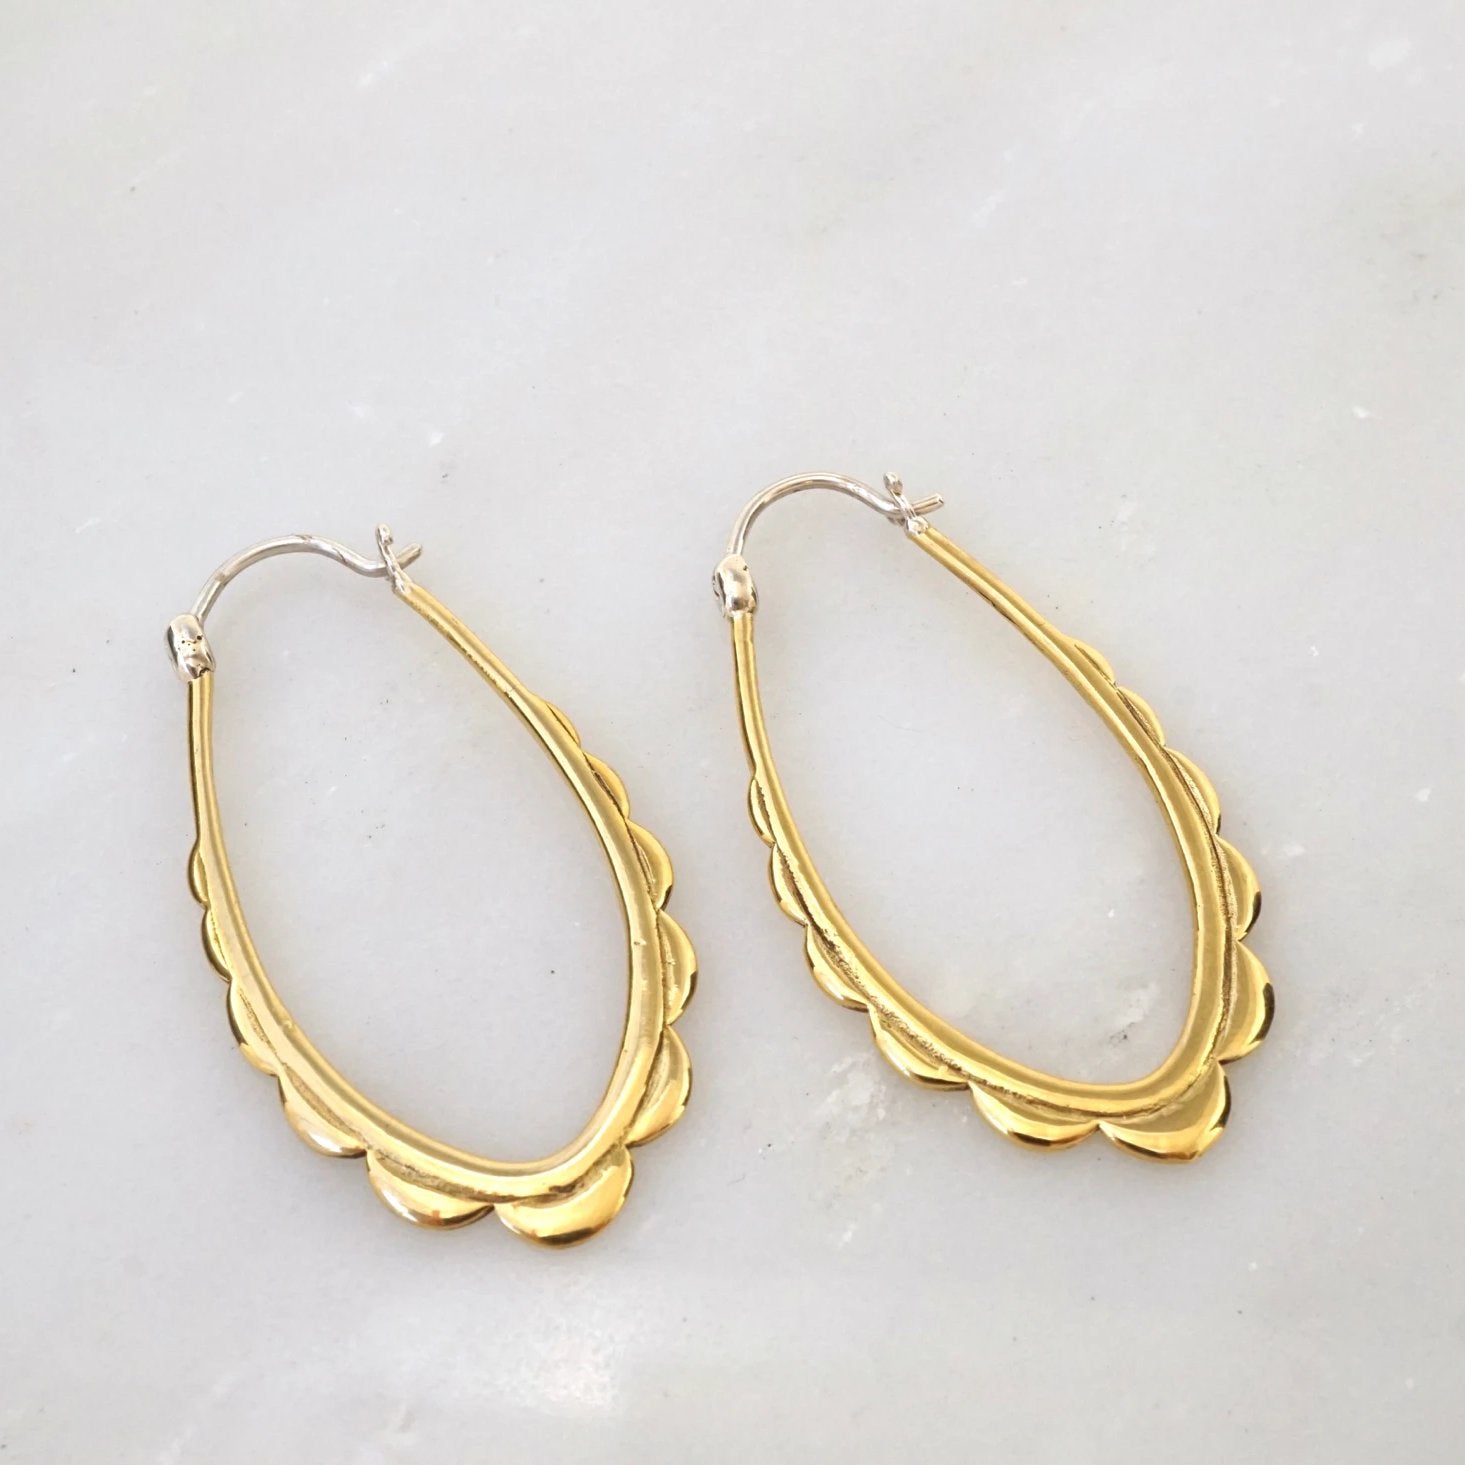 Oval Hoops - Gold-Tone Scalloped Hoop Earrings with solid sterling ear-wire - Everyday Earrings - Delicate Boho Hoops (114B)